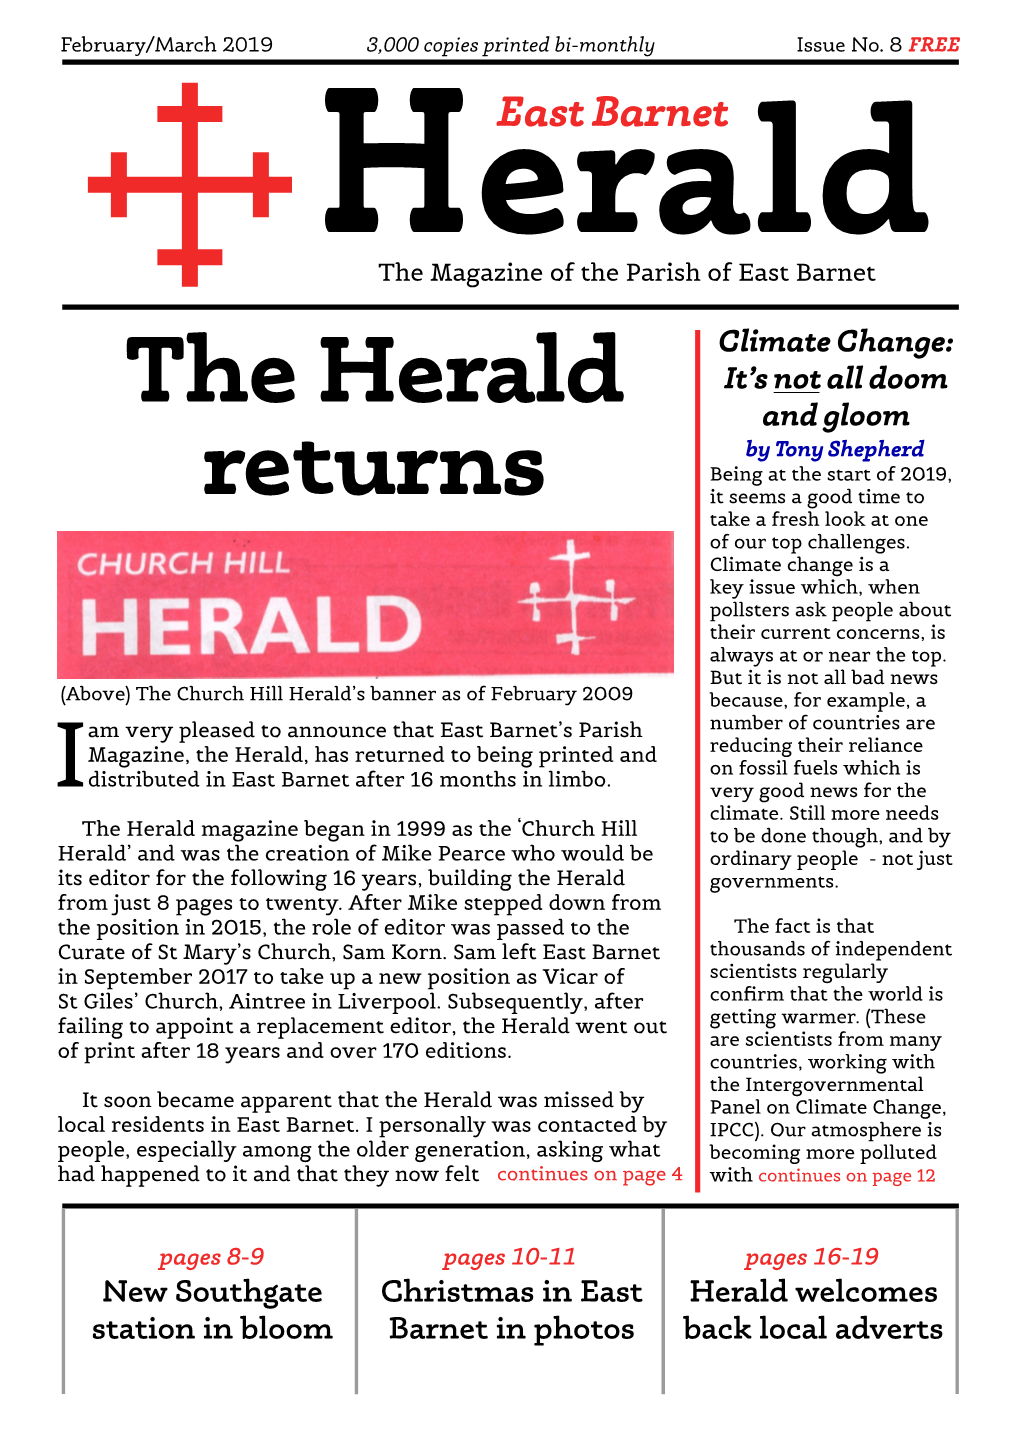 Heraldeast Barnet the Magazine of the Parish of East Barnet